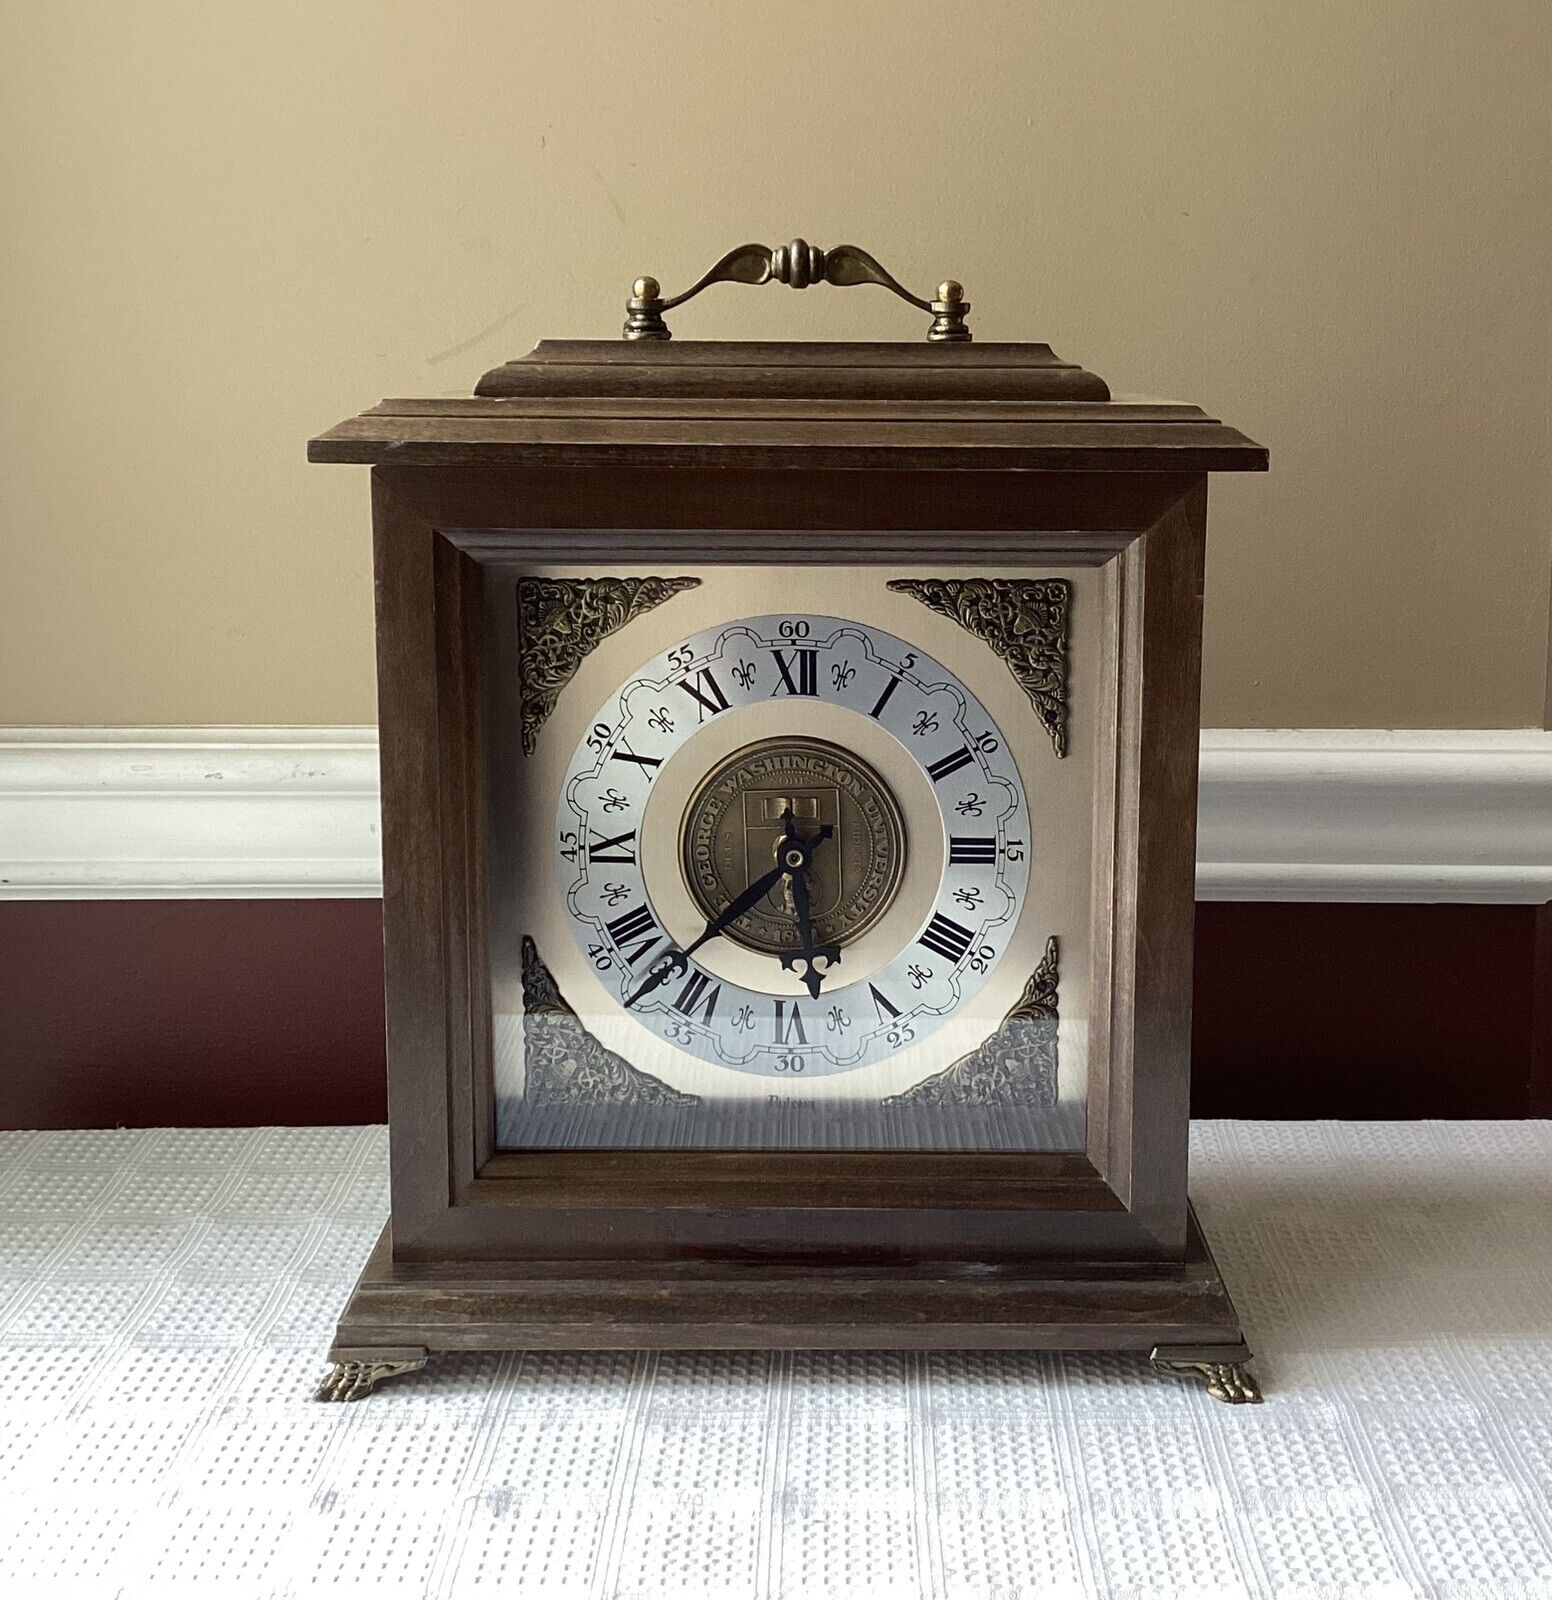 VTG Bulova George Washington University Mantel Clock, Olde Timer Quartz, Working